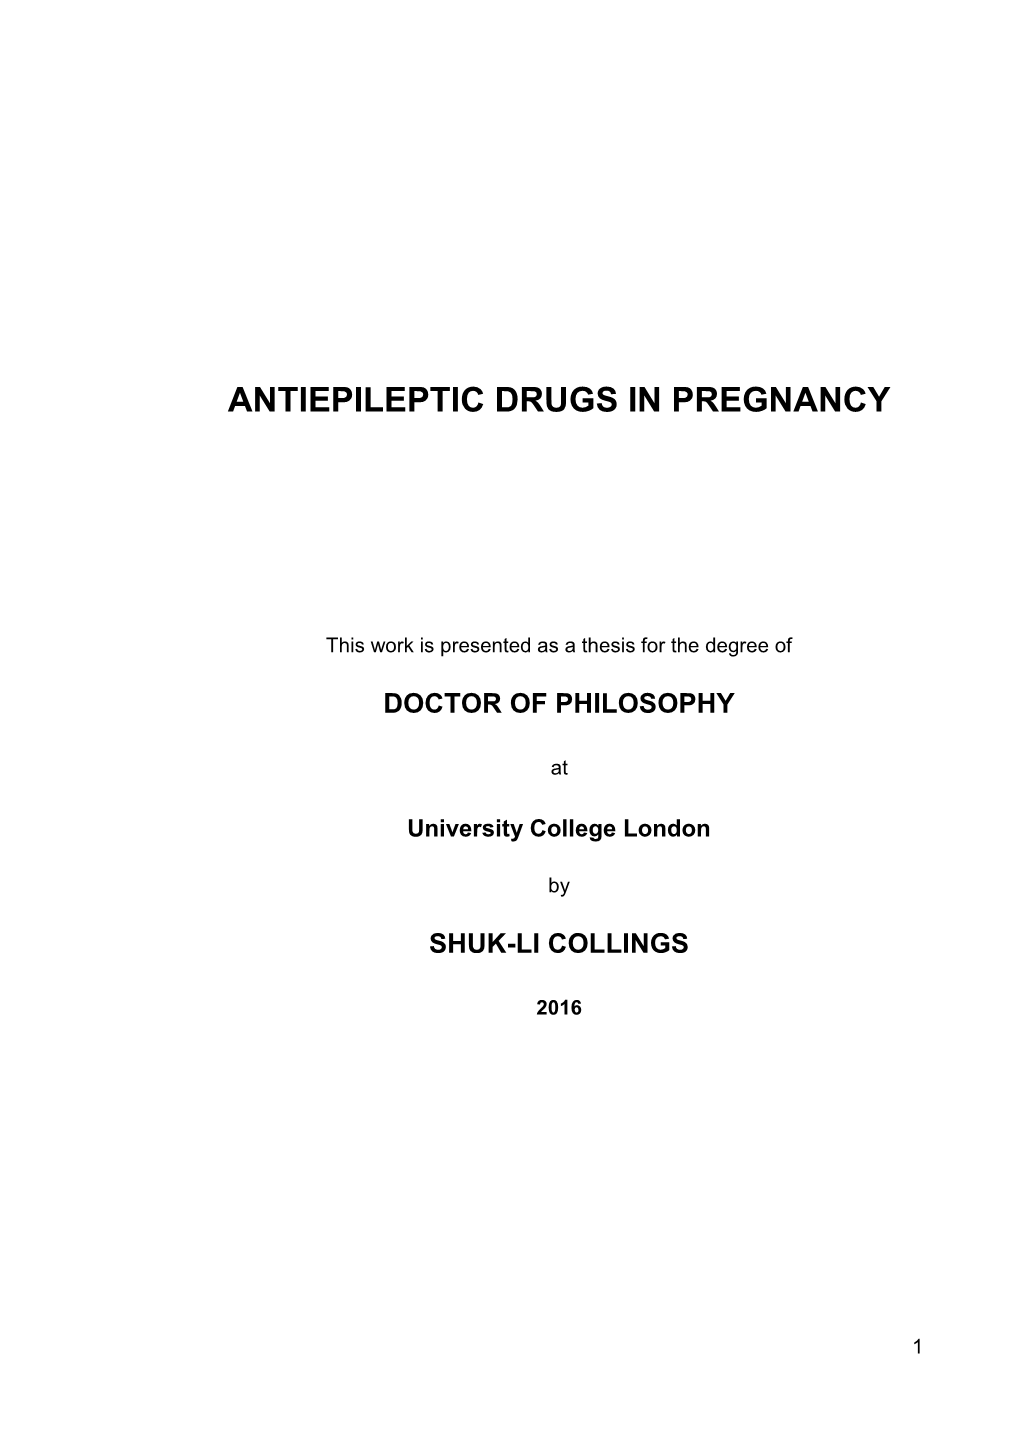 Antiepileptic Drugs in Pregnancy